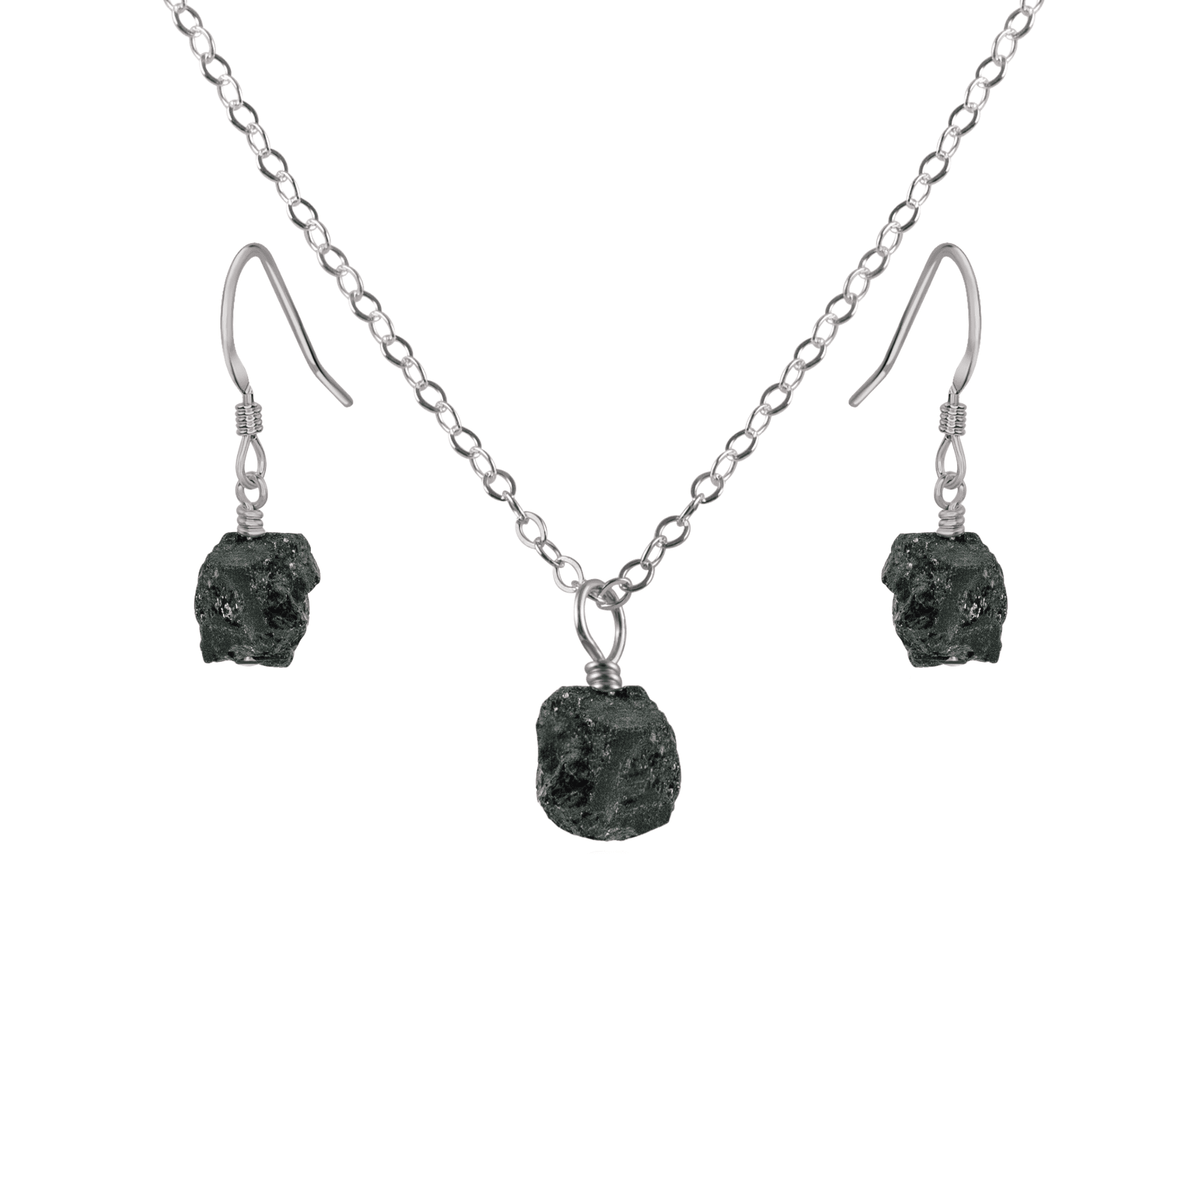 Raw Black Tourmaline Crystal Earrings & Necklace Set - Raw Black Tourmaline Crystal Earrings & Necklace Set - Stainless Steel - Luna Tide Handmade Crystal Jewellery